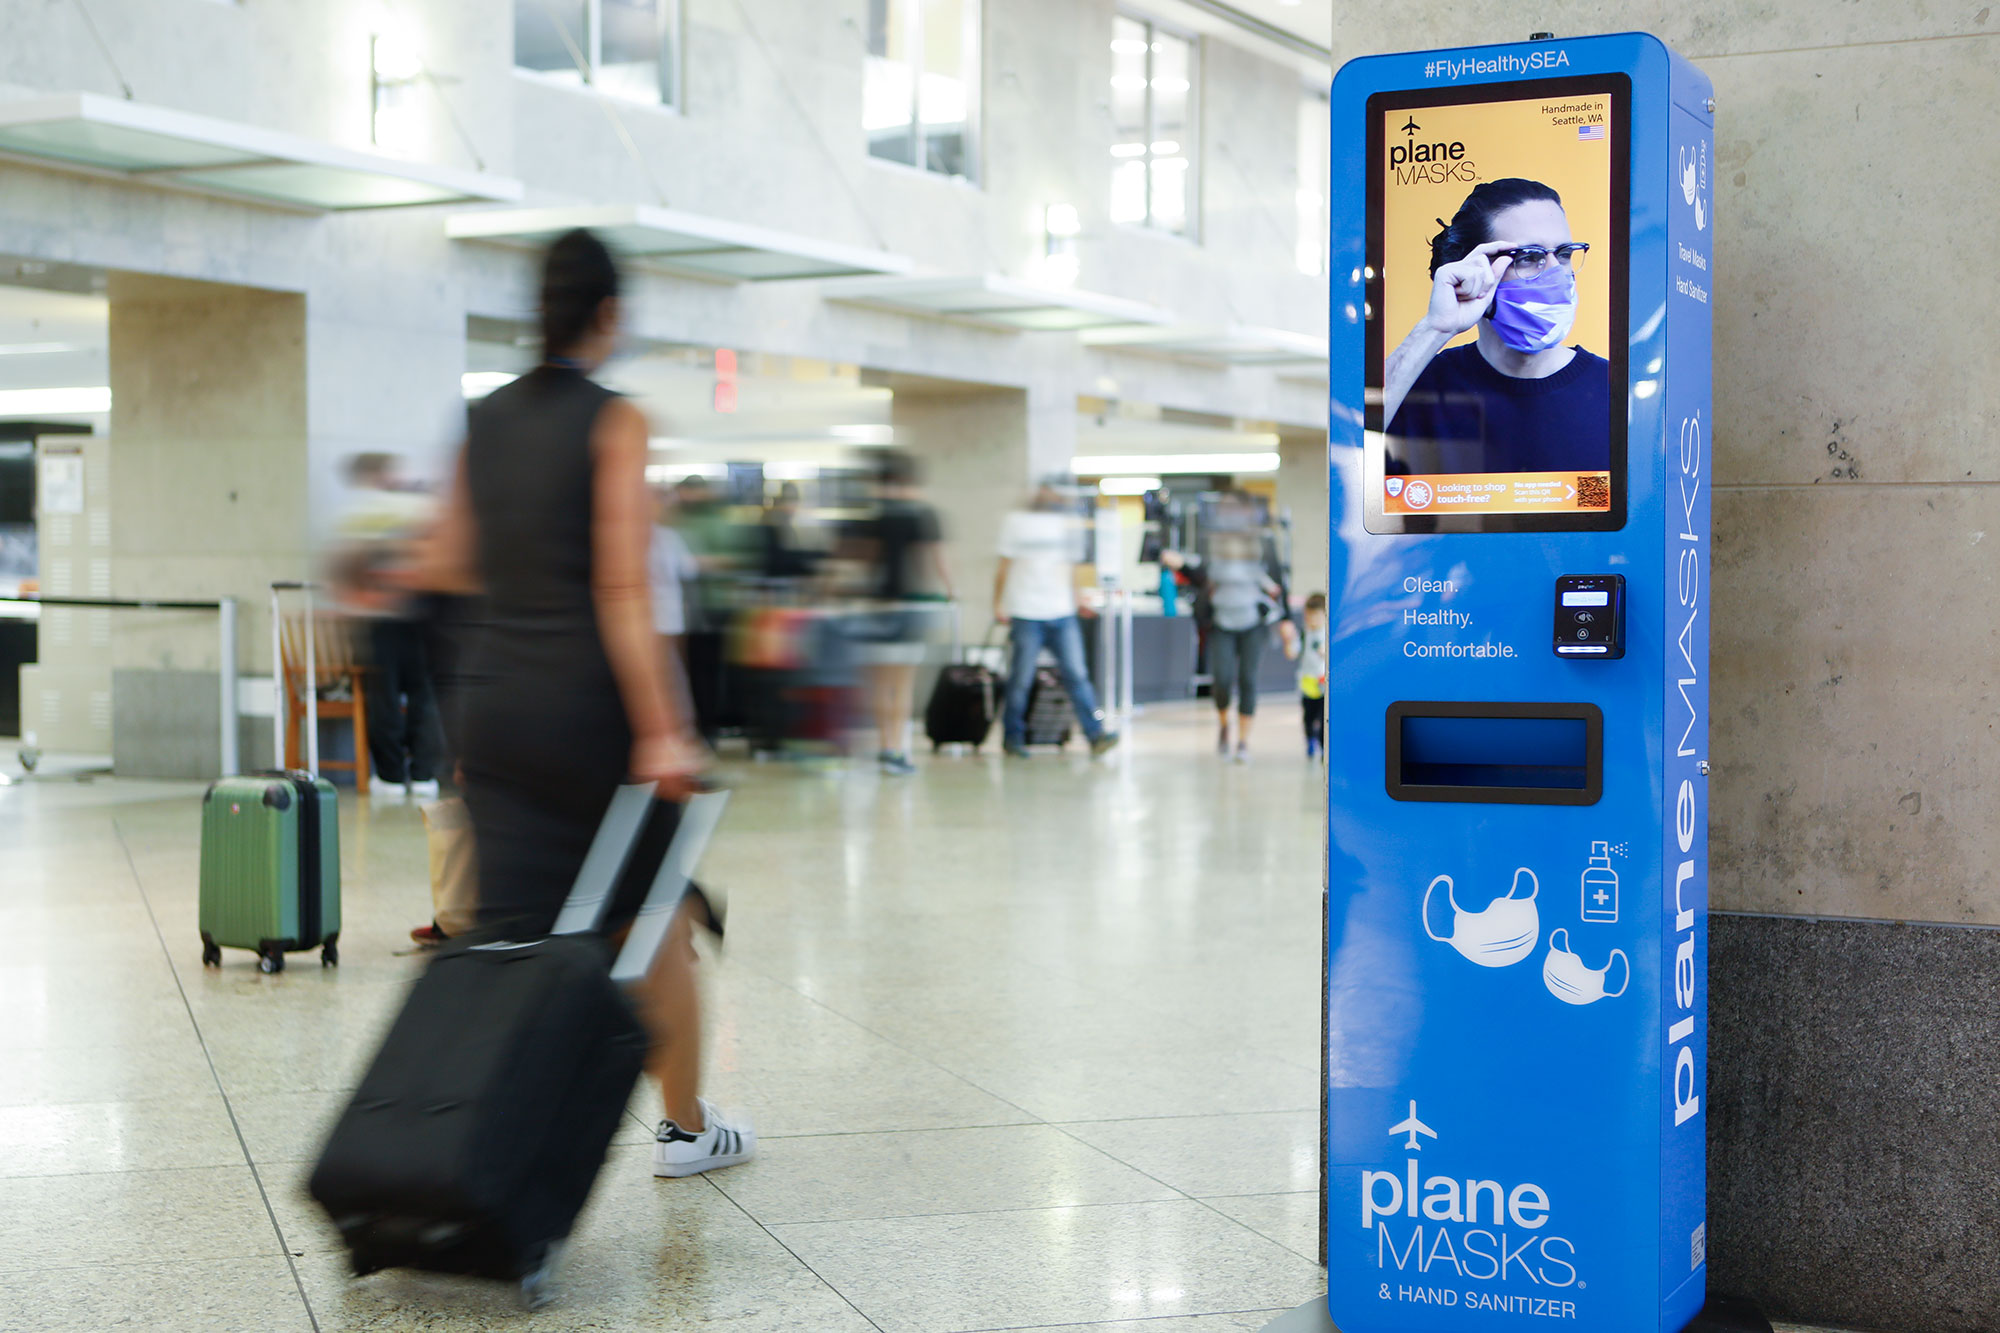 SEA Plane Masks Vending Machine with Traveler